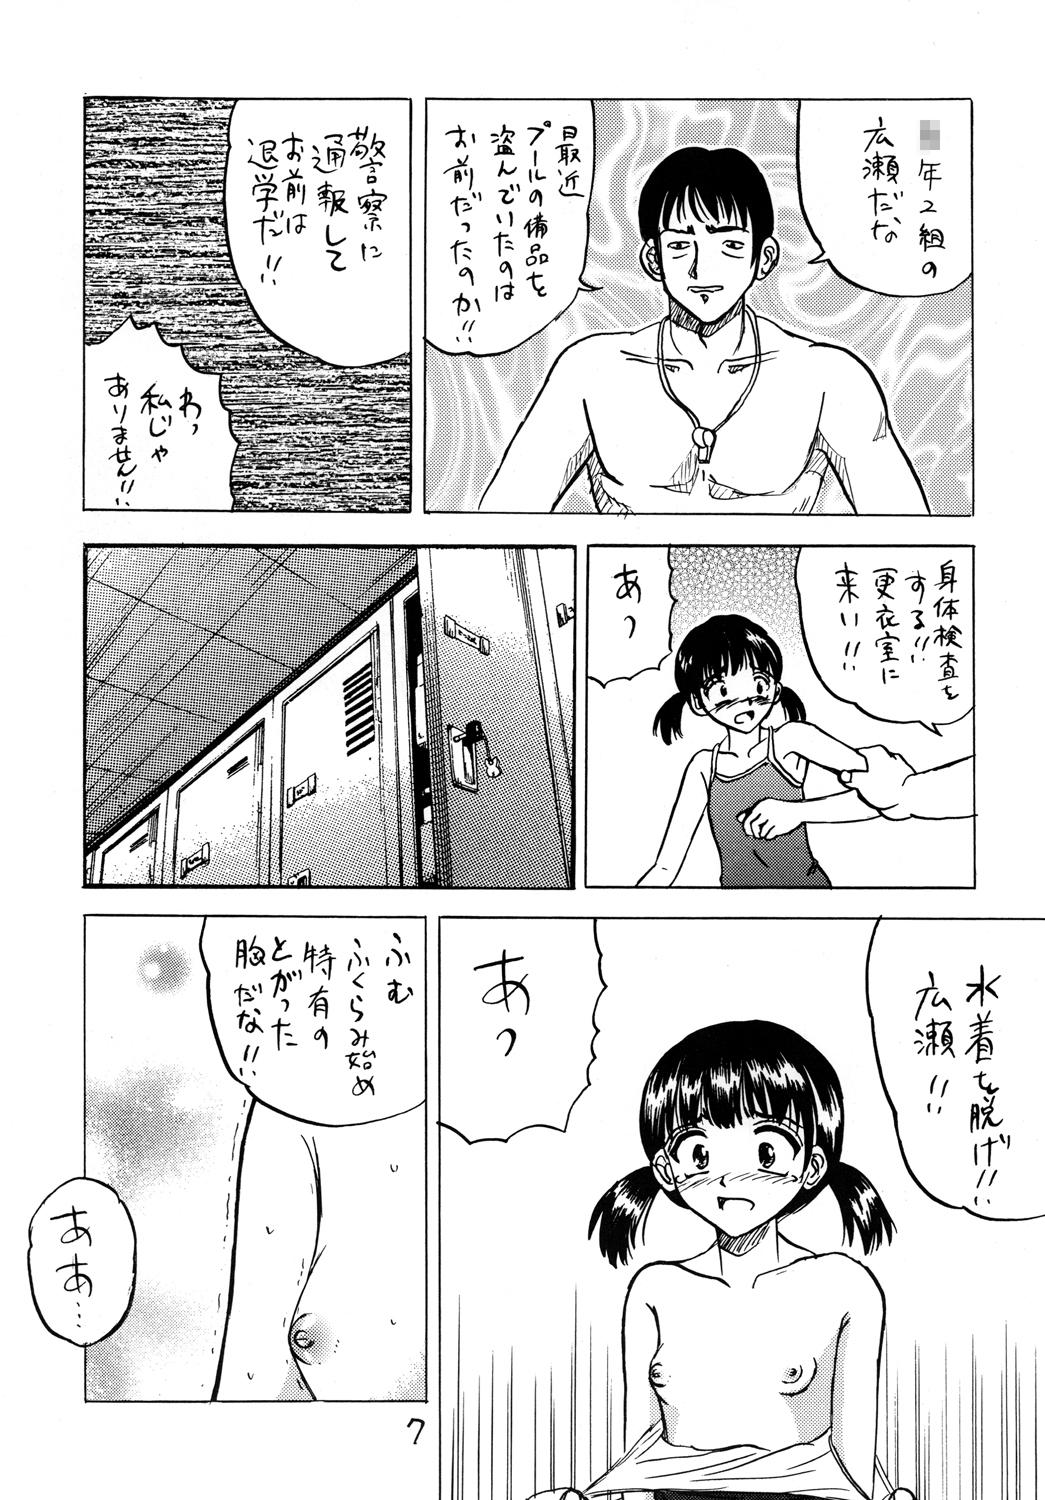 Best Blowjobs Ever Manatsu no ￮ Gakusei Mulata - Page 5